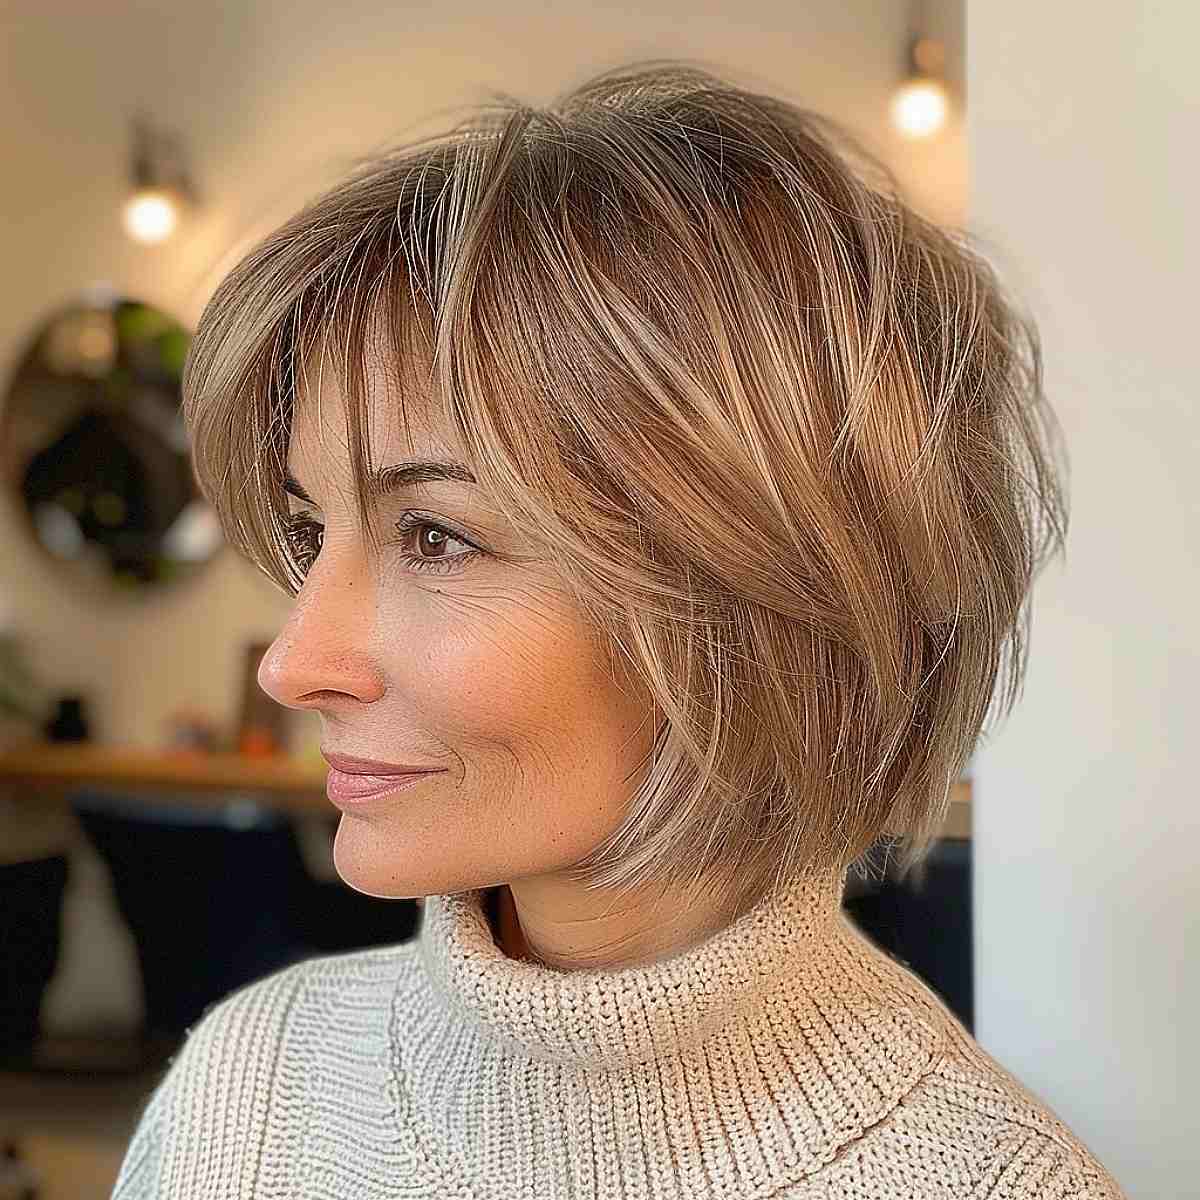 Chin-length Maintenance Haircut for Women Over 40